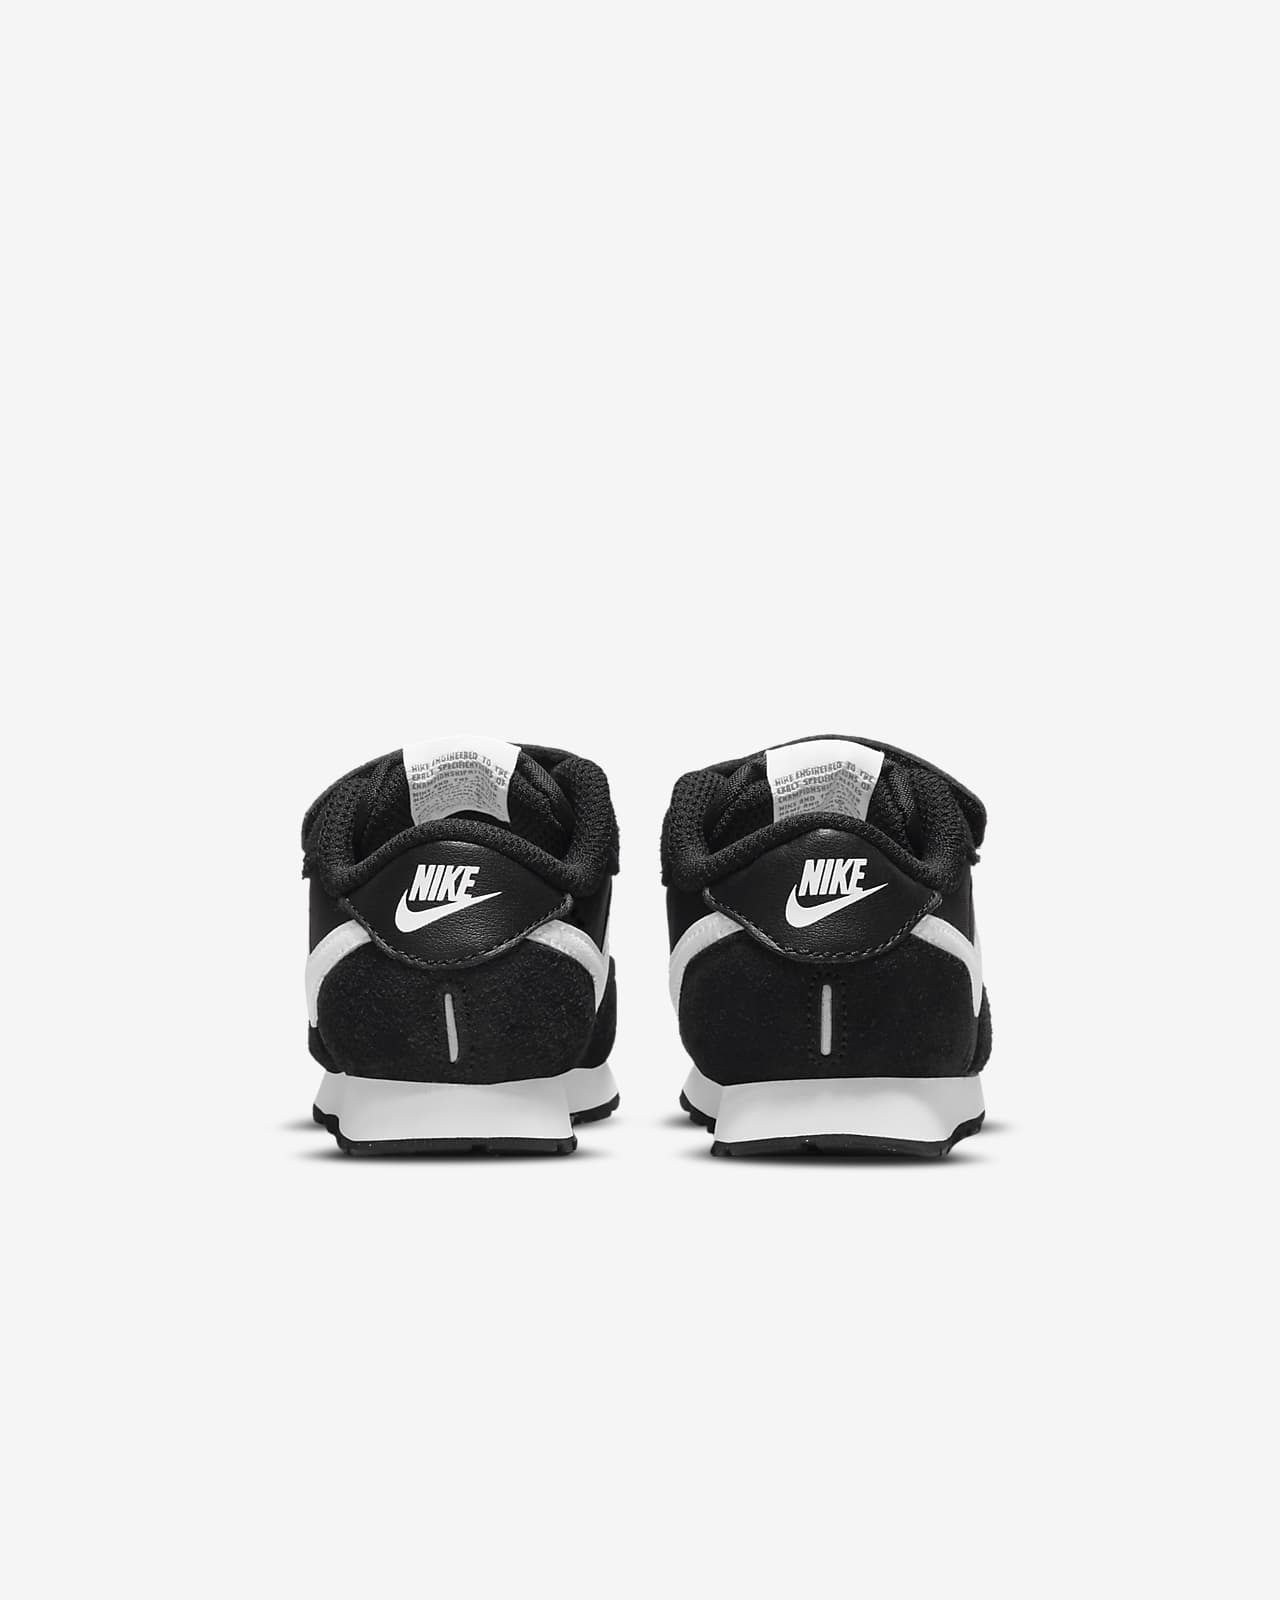 Zapatillas para niño plana NIKE cn8560-002 en negro